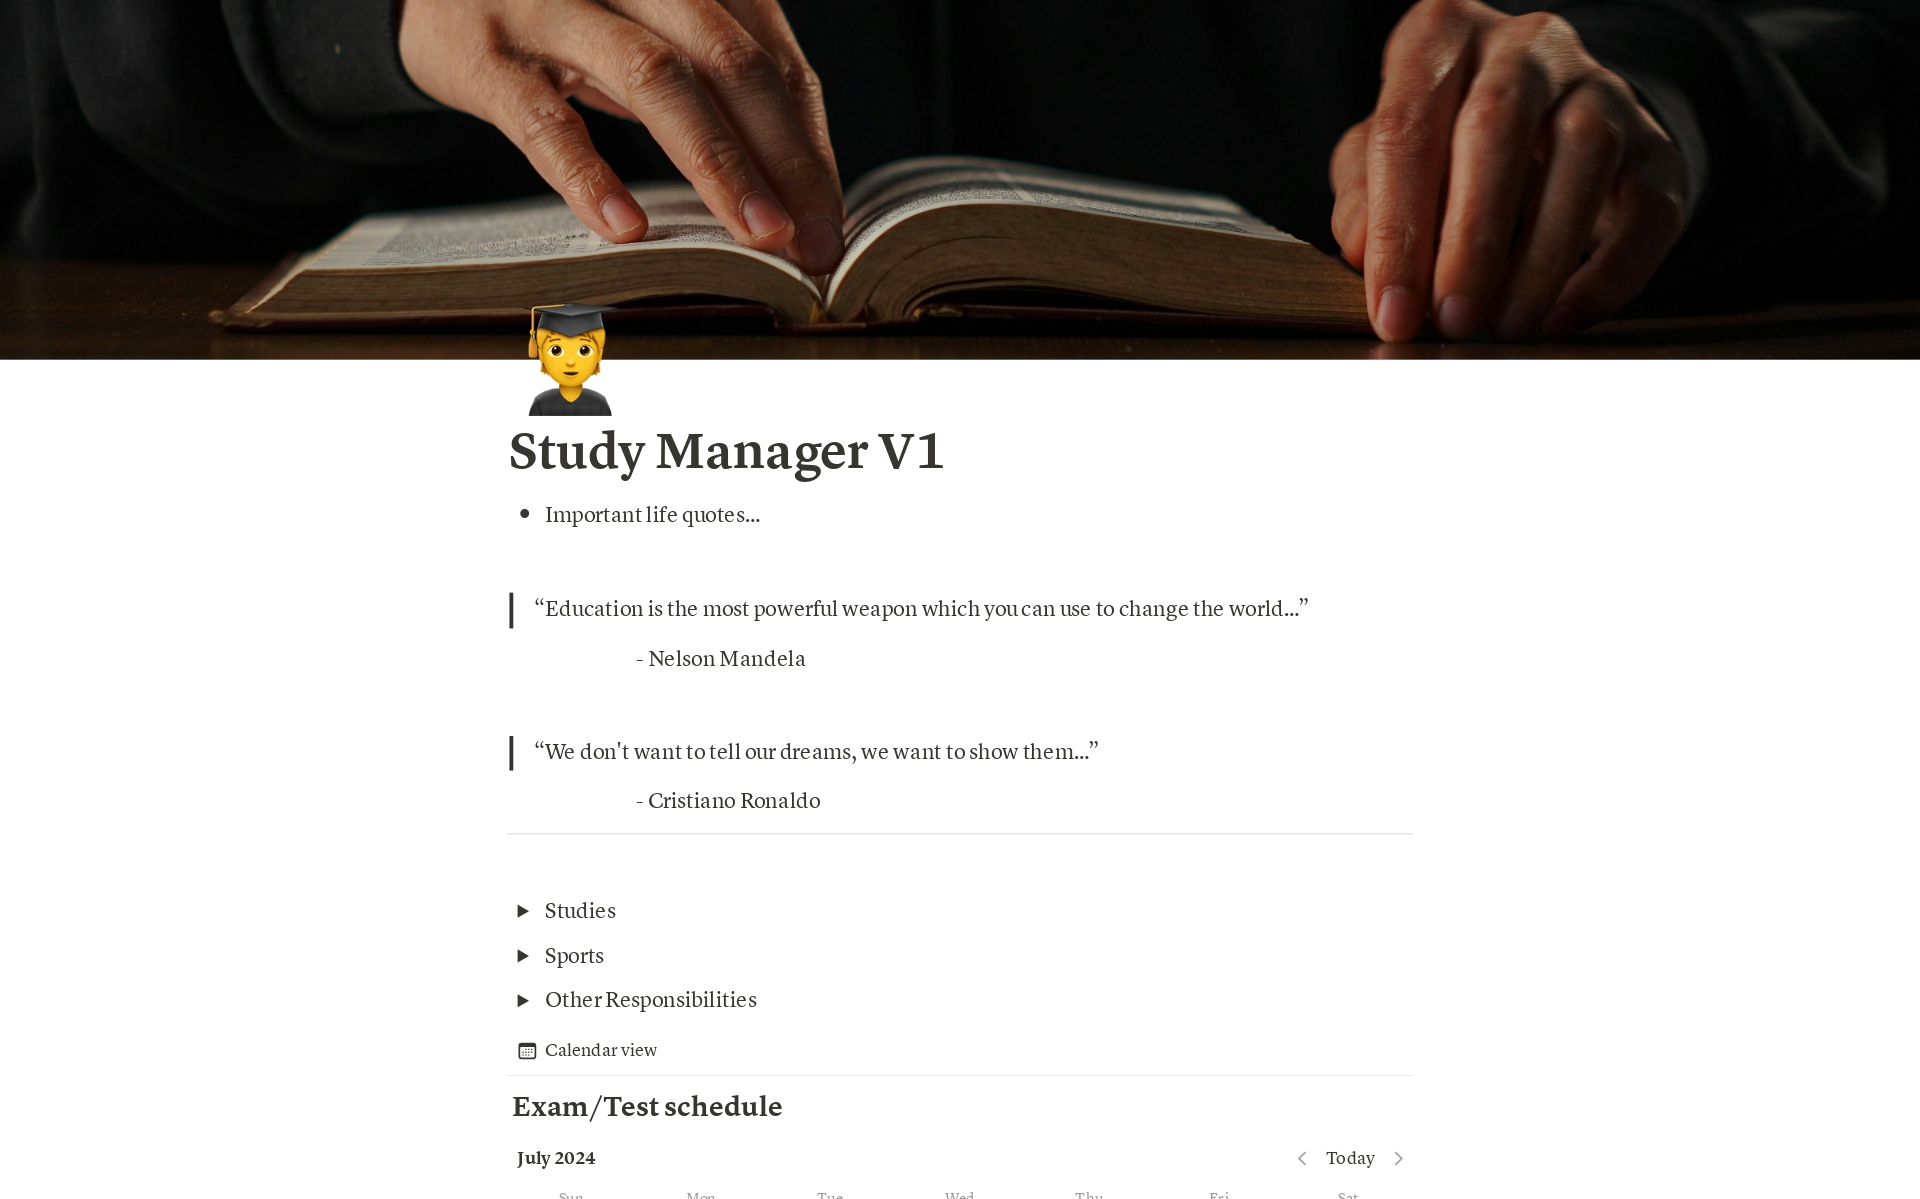 Aperçu du modèle de Study Manager V1 